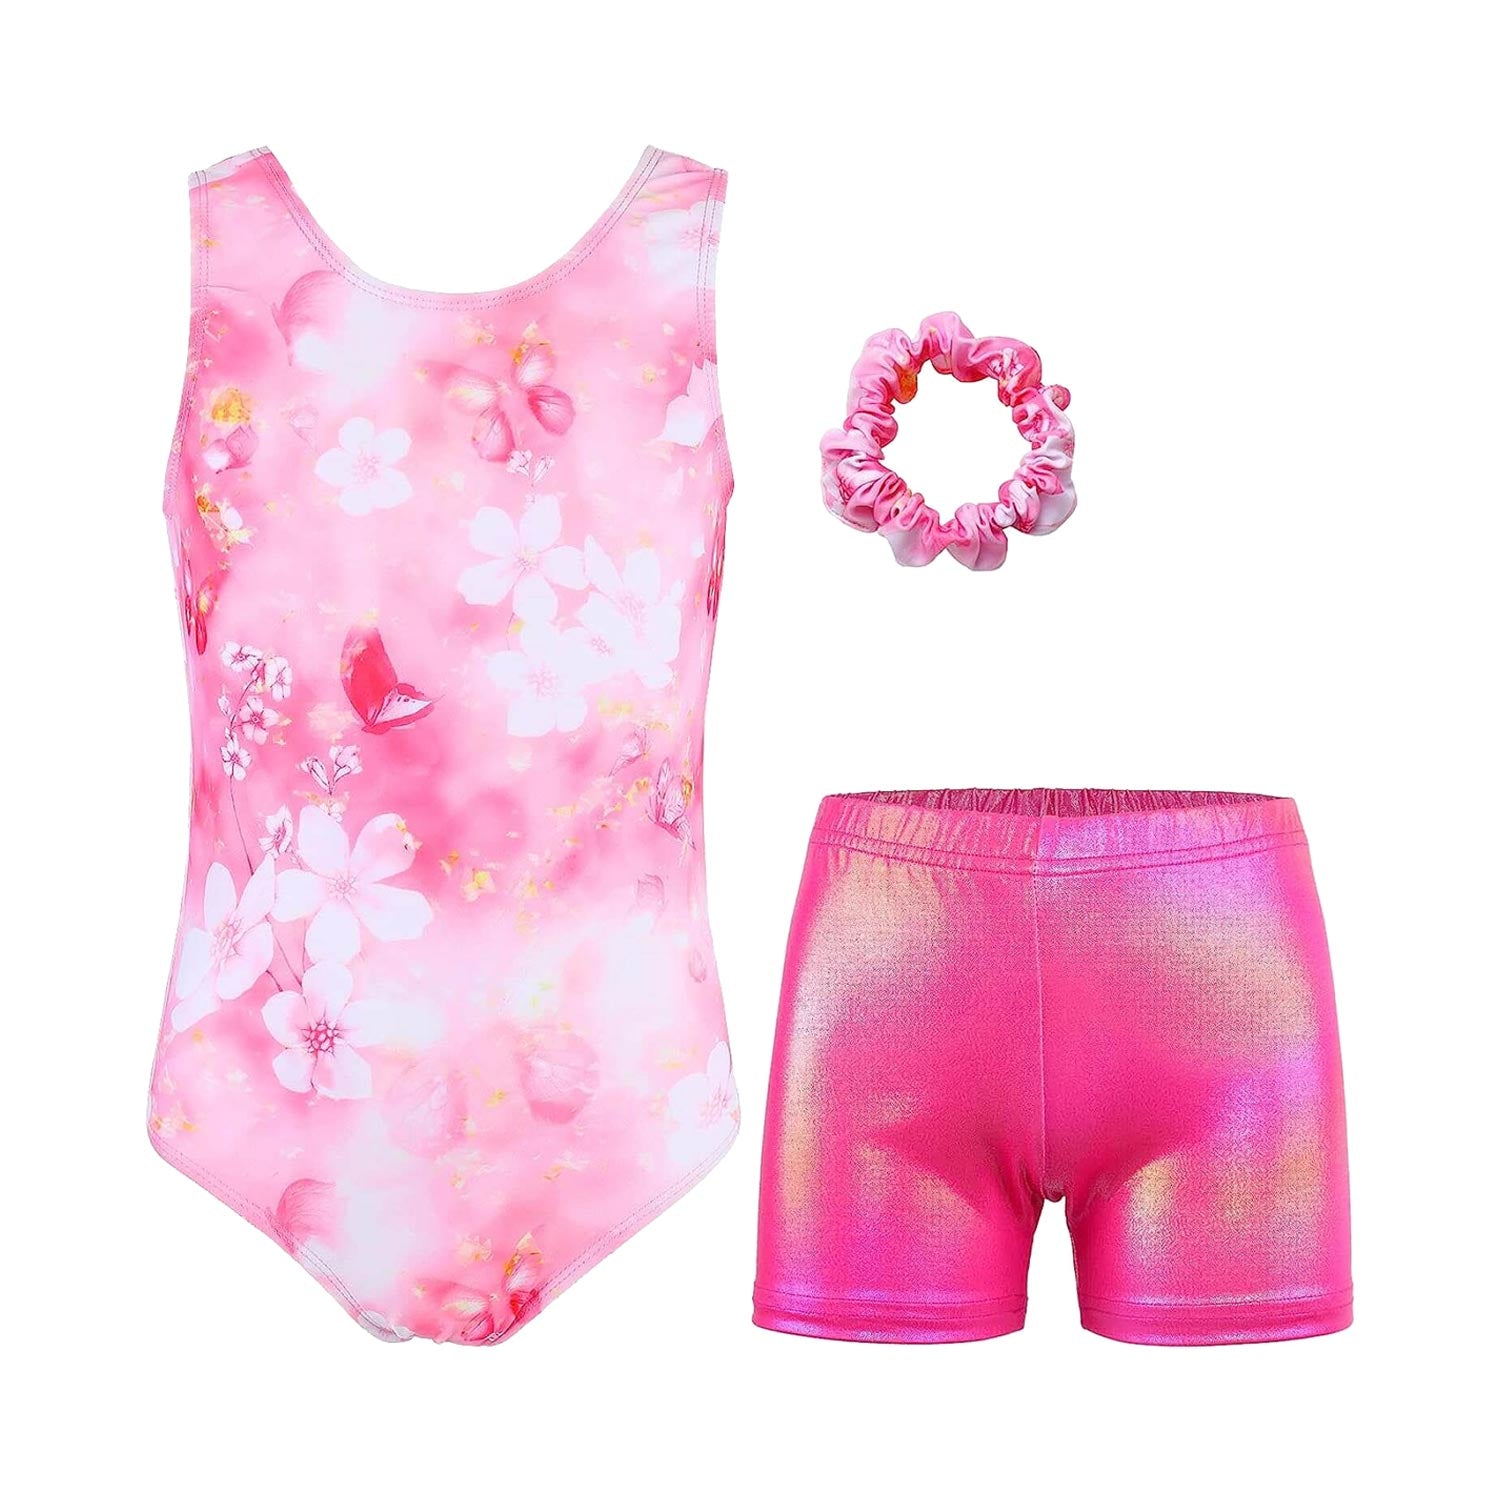 Girls Pink Flower Gymnastics Leotards, Outfit Set for Girls - JOYSTREAM